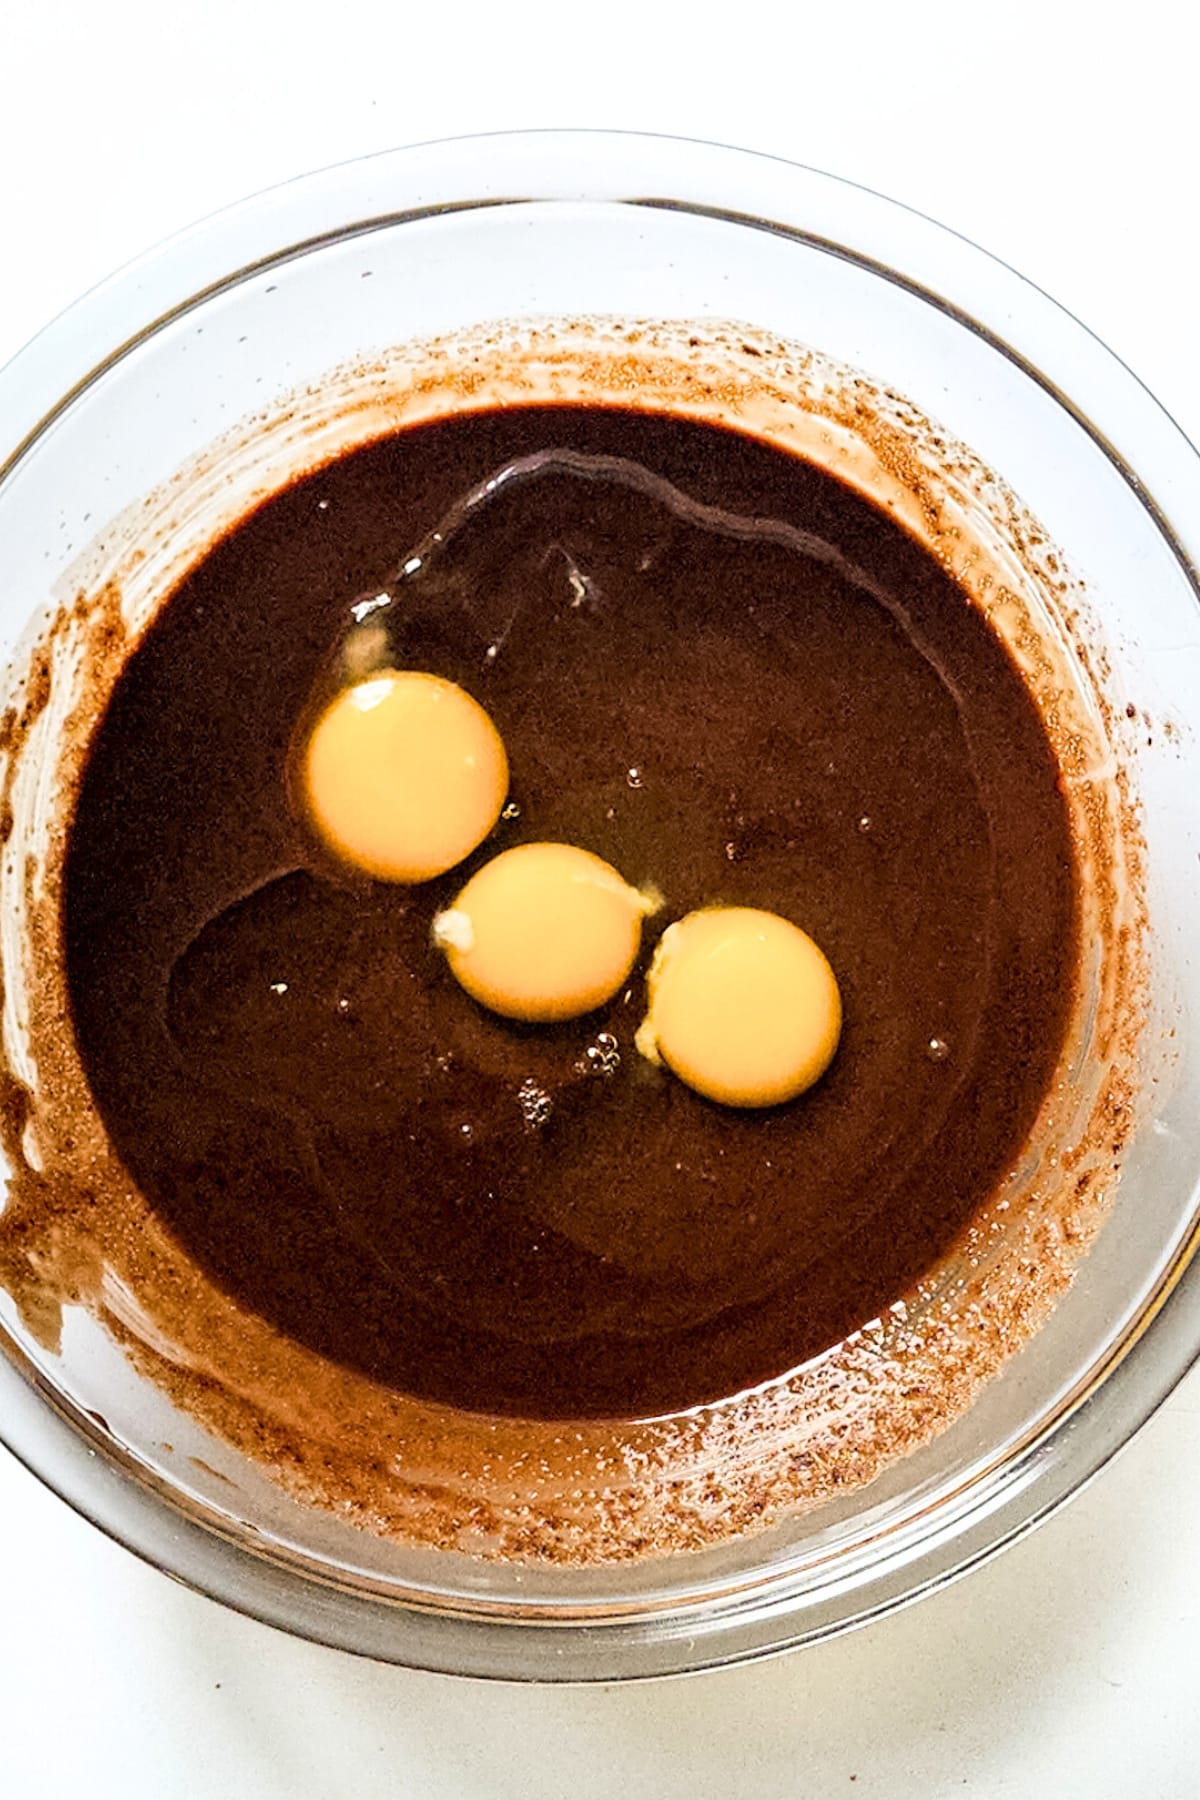 Eggs in chocolate mixture.